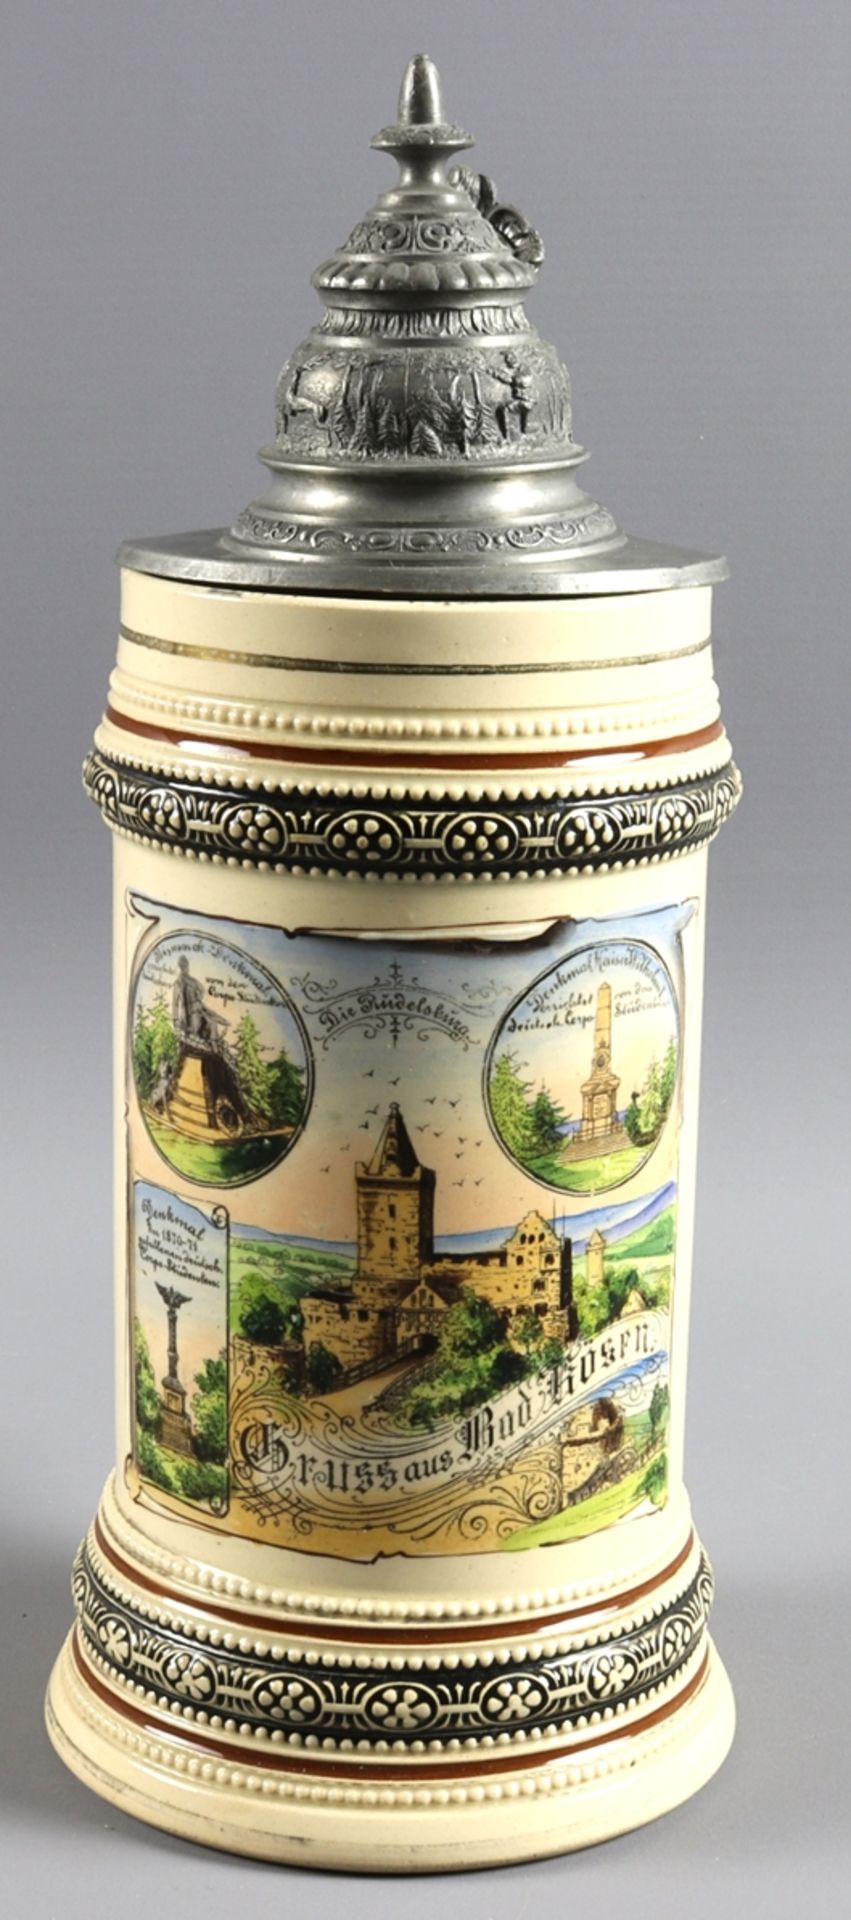 Memorial jug of the town of Kösen, Historicism circa 1900, German